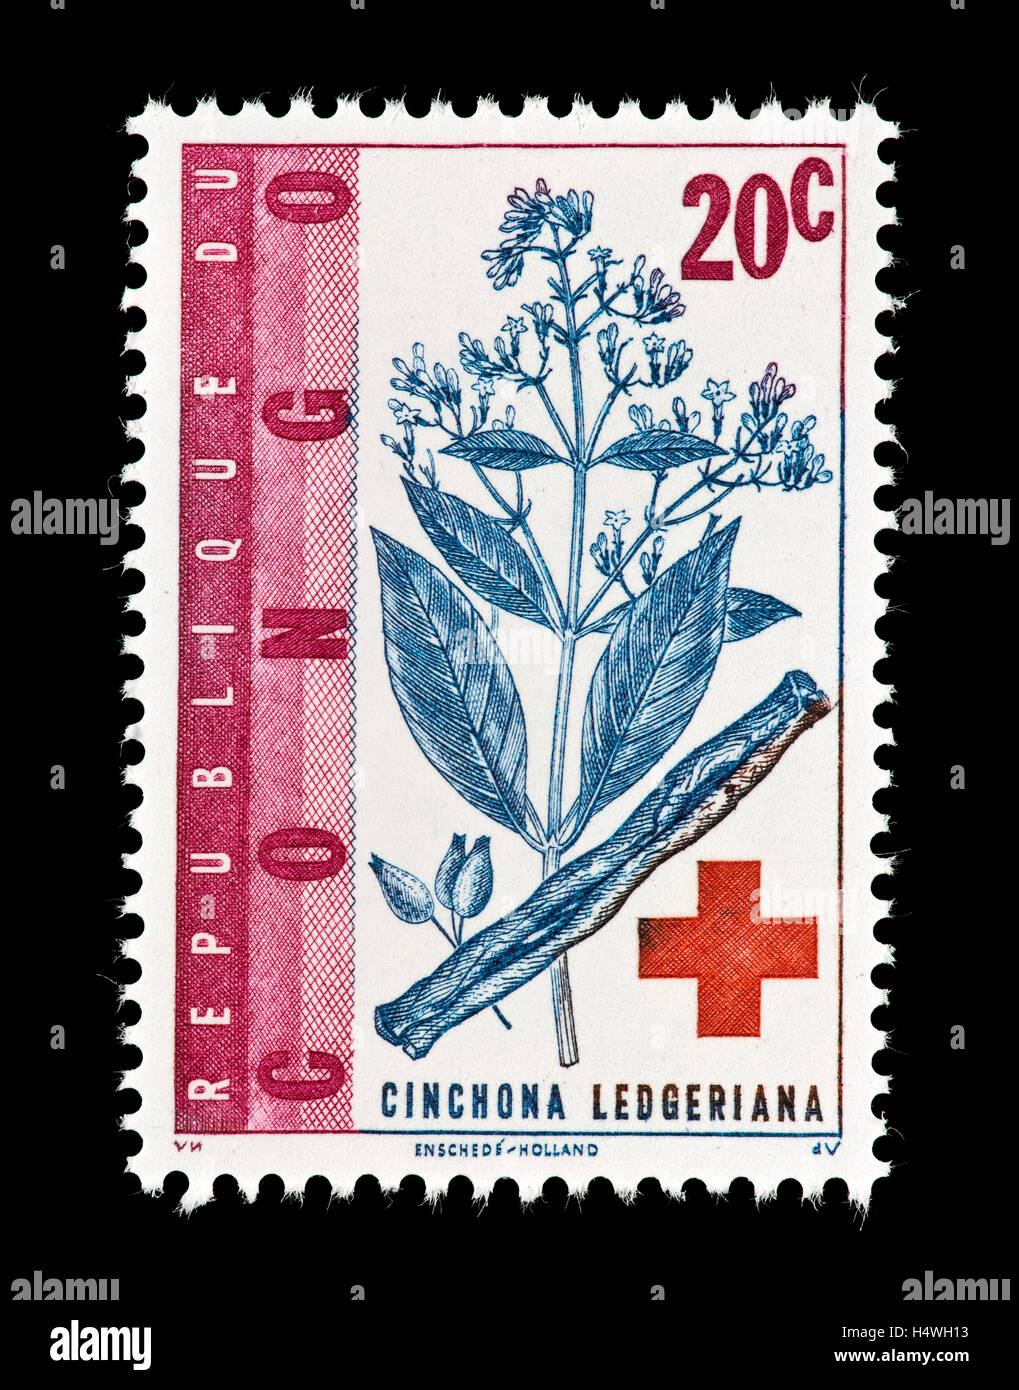 Postage stamp from Congo depicting Cinchona ledgeriana, original source of quinine. Stock Photo